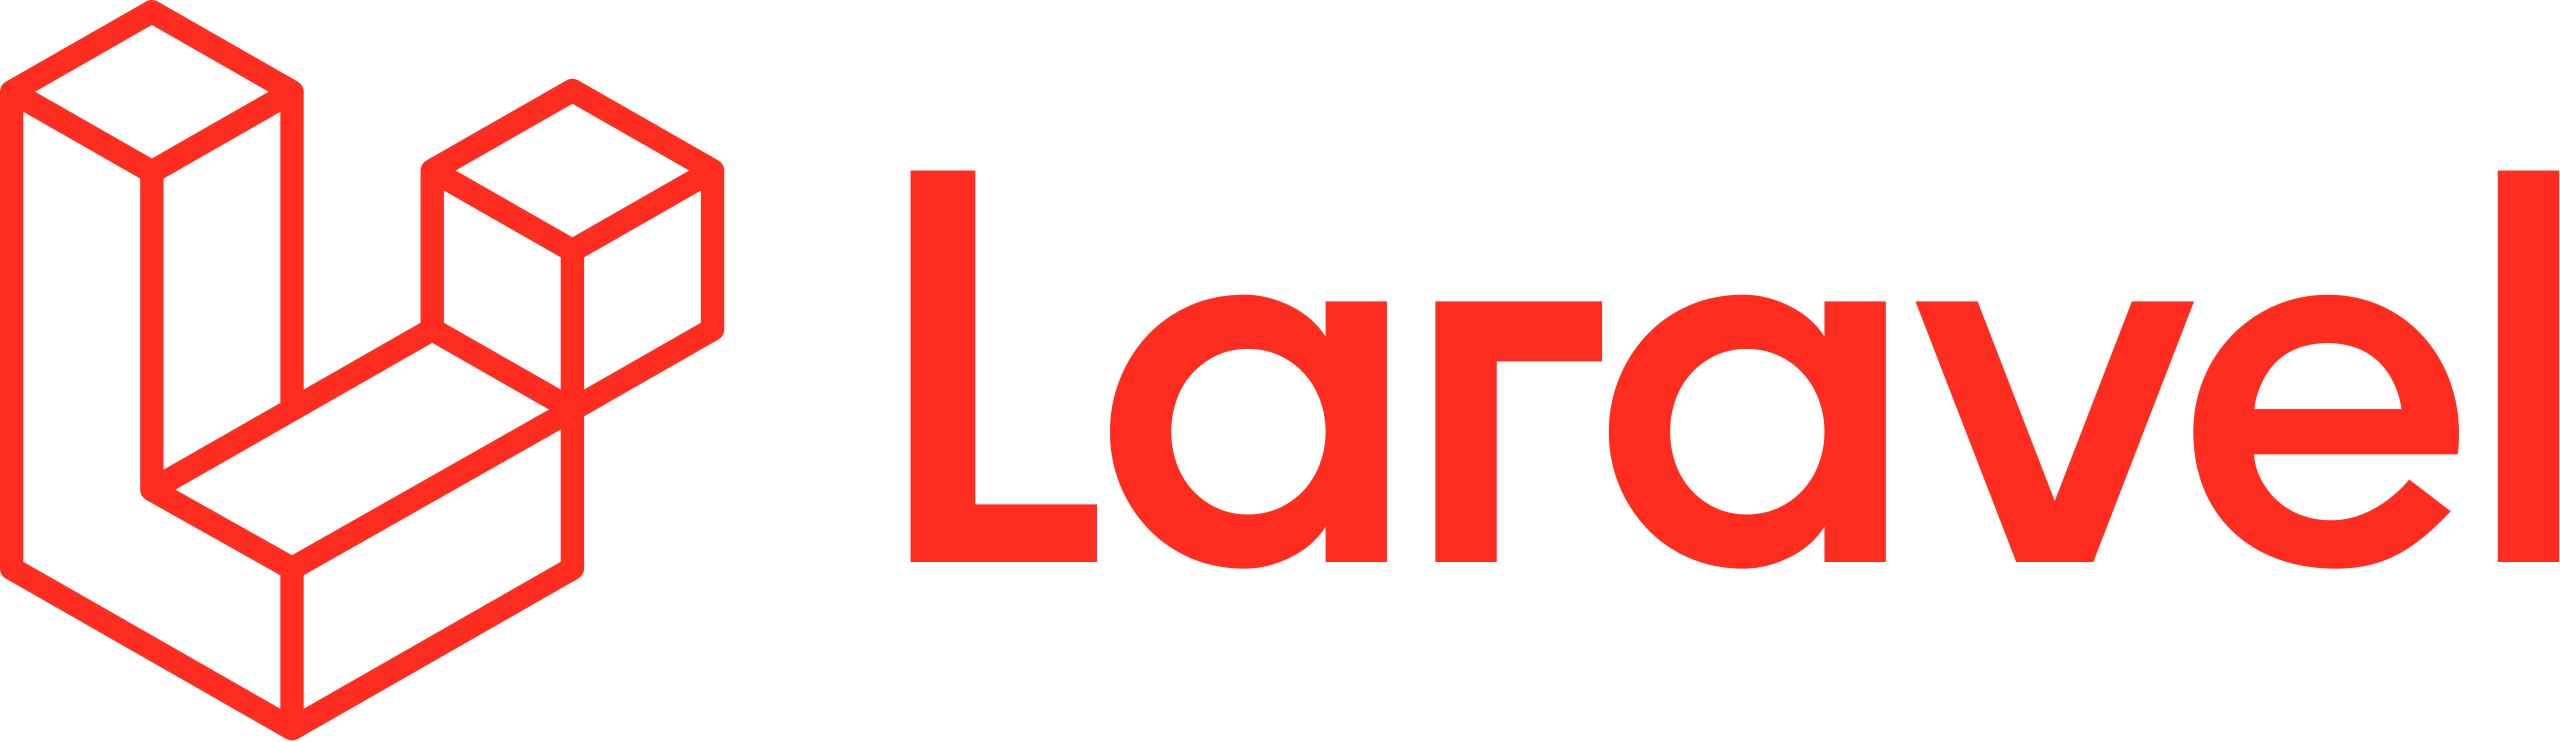 laravel logo